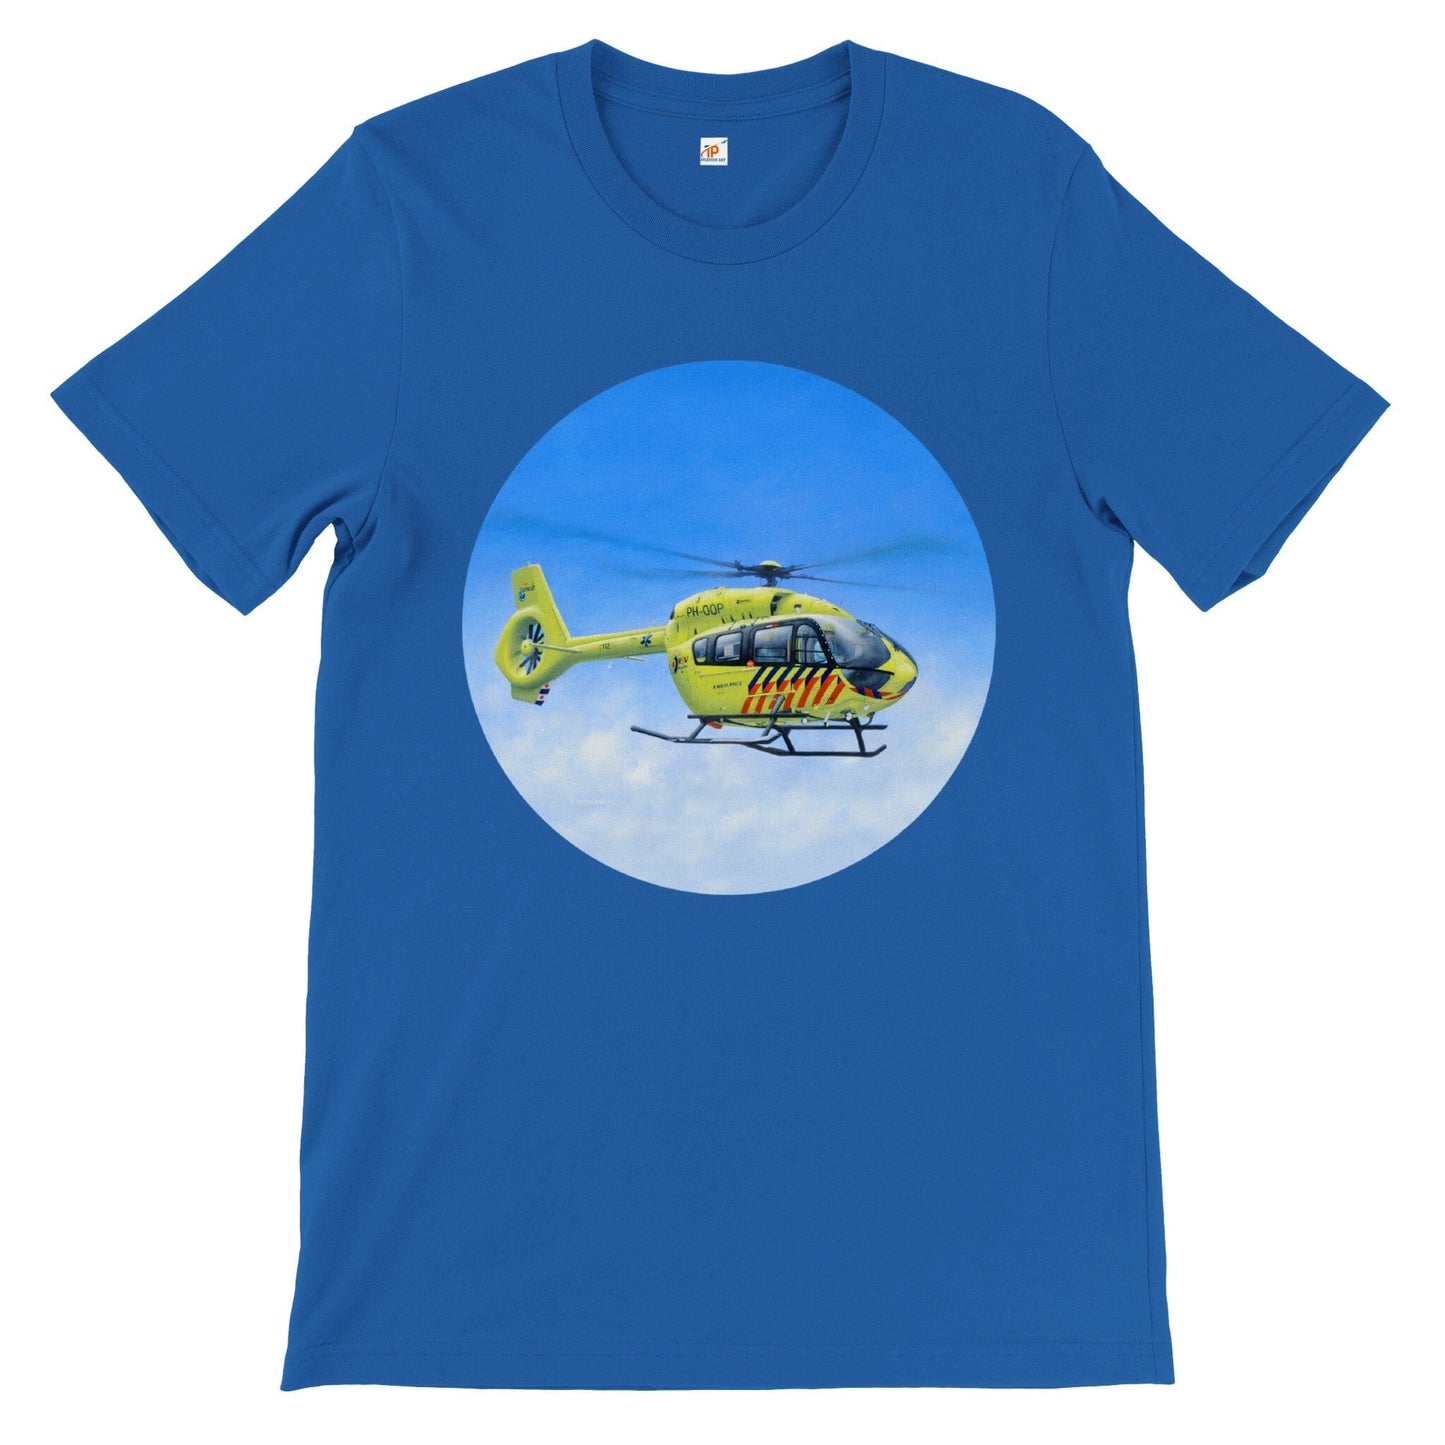 Peter Hoogenberg - T-shirt - Ambulance Helicopter Wadden Islands - Premium Unisex T-shirt TP Aviation Art Royal S 